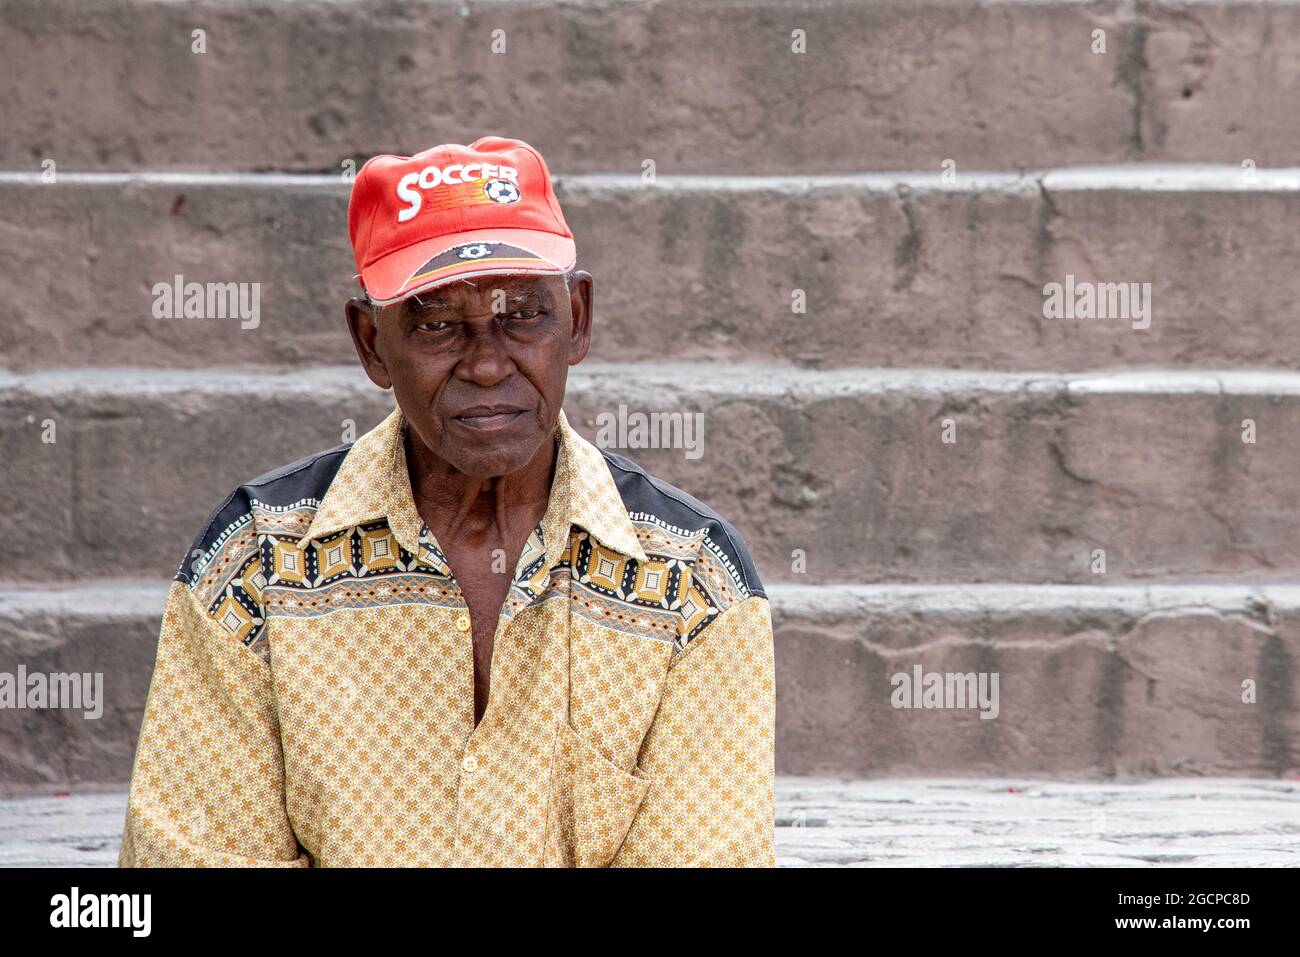 Candid portrait of Cuban man, Santiago de Cuba, Cuba, 2016 Stock Photo